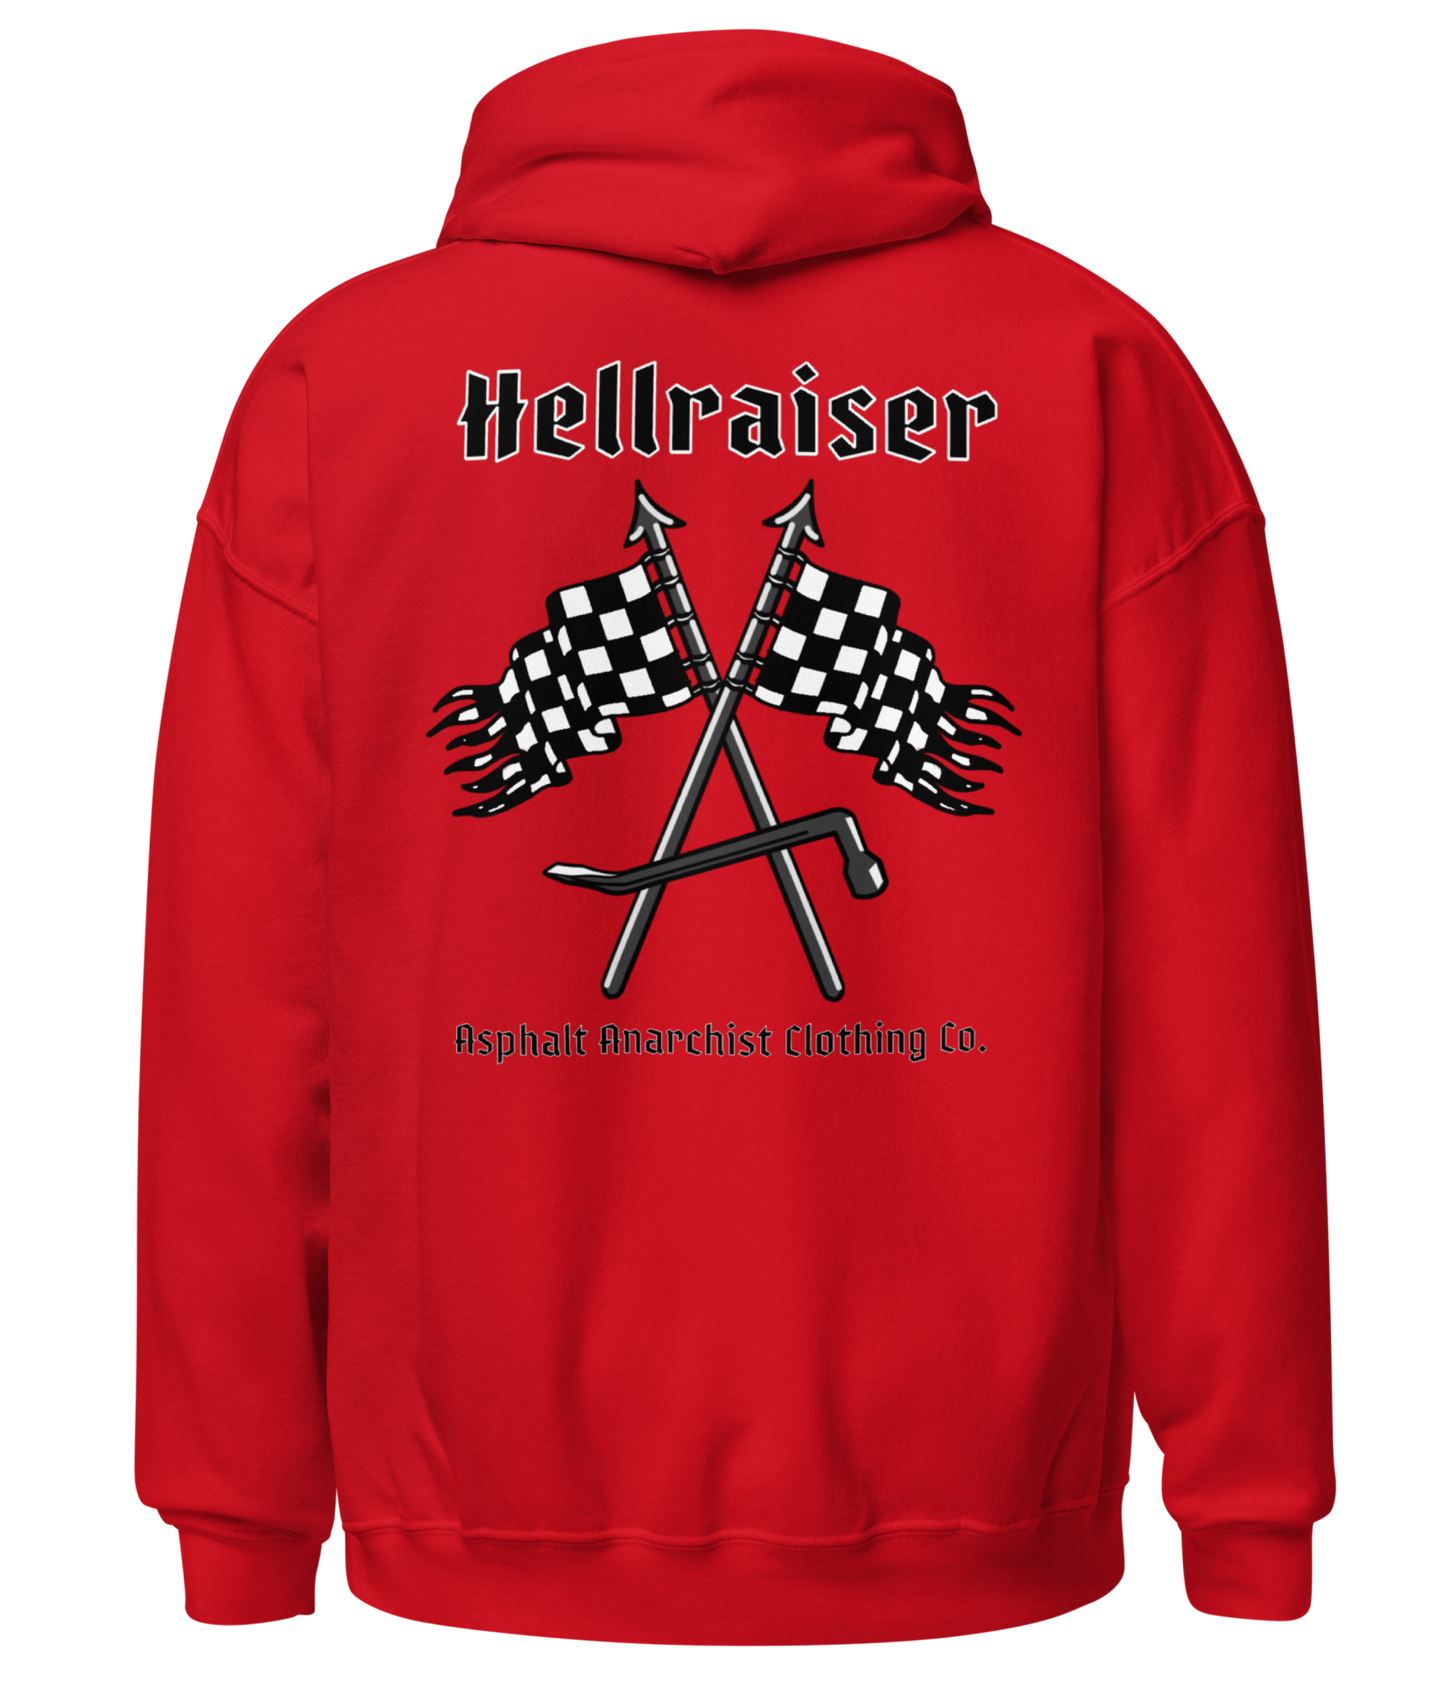 Hellraiser Hoodie From Asphalt Anarchist Clothing Co. HOT ROD KUSTOM KULTURE APPAREL & PRODUCTS